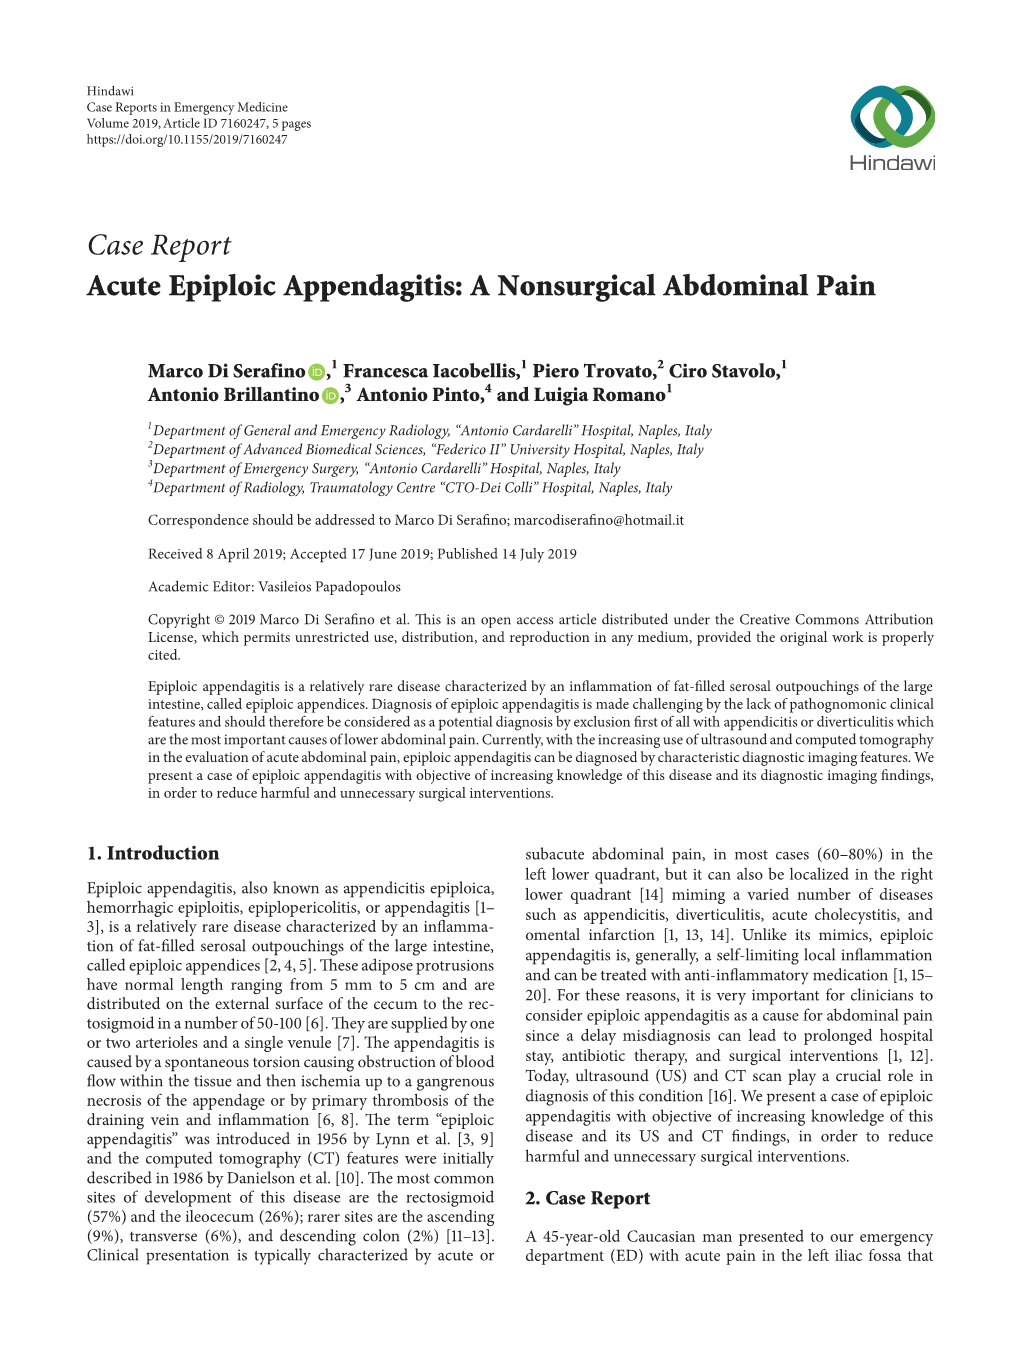 Acute Epiploic Appendagitis: a Nonsurgical Abdominal Pain